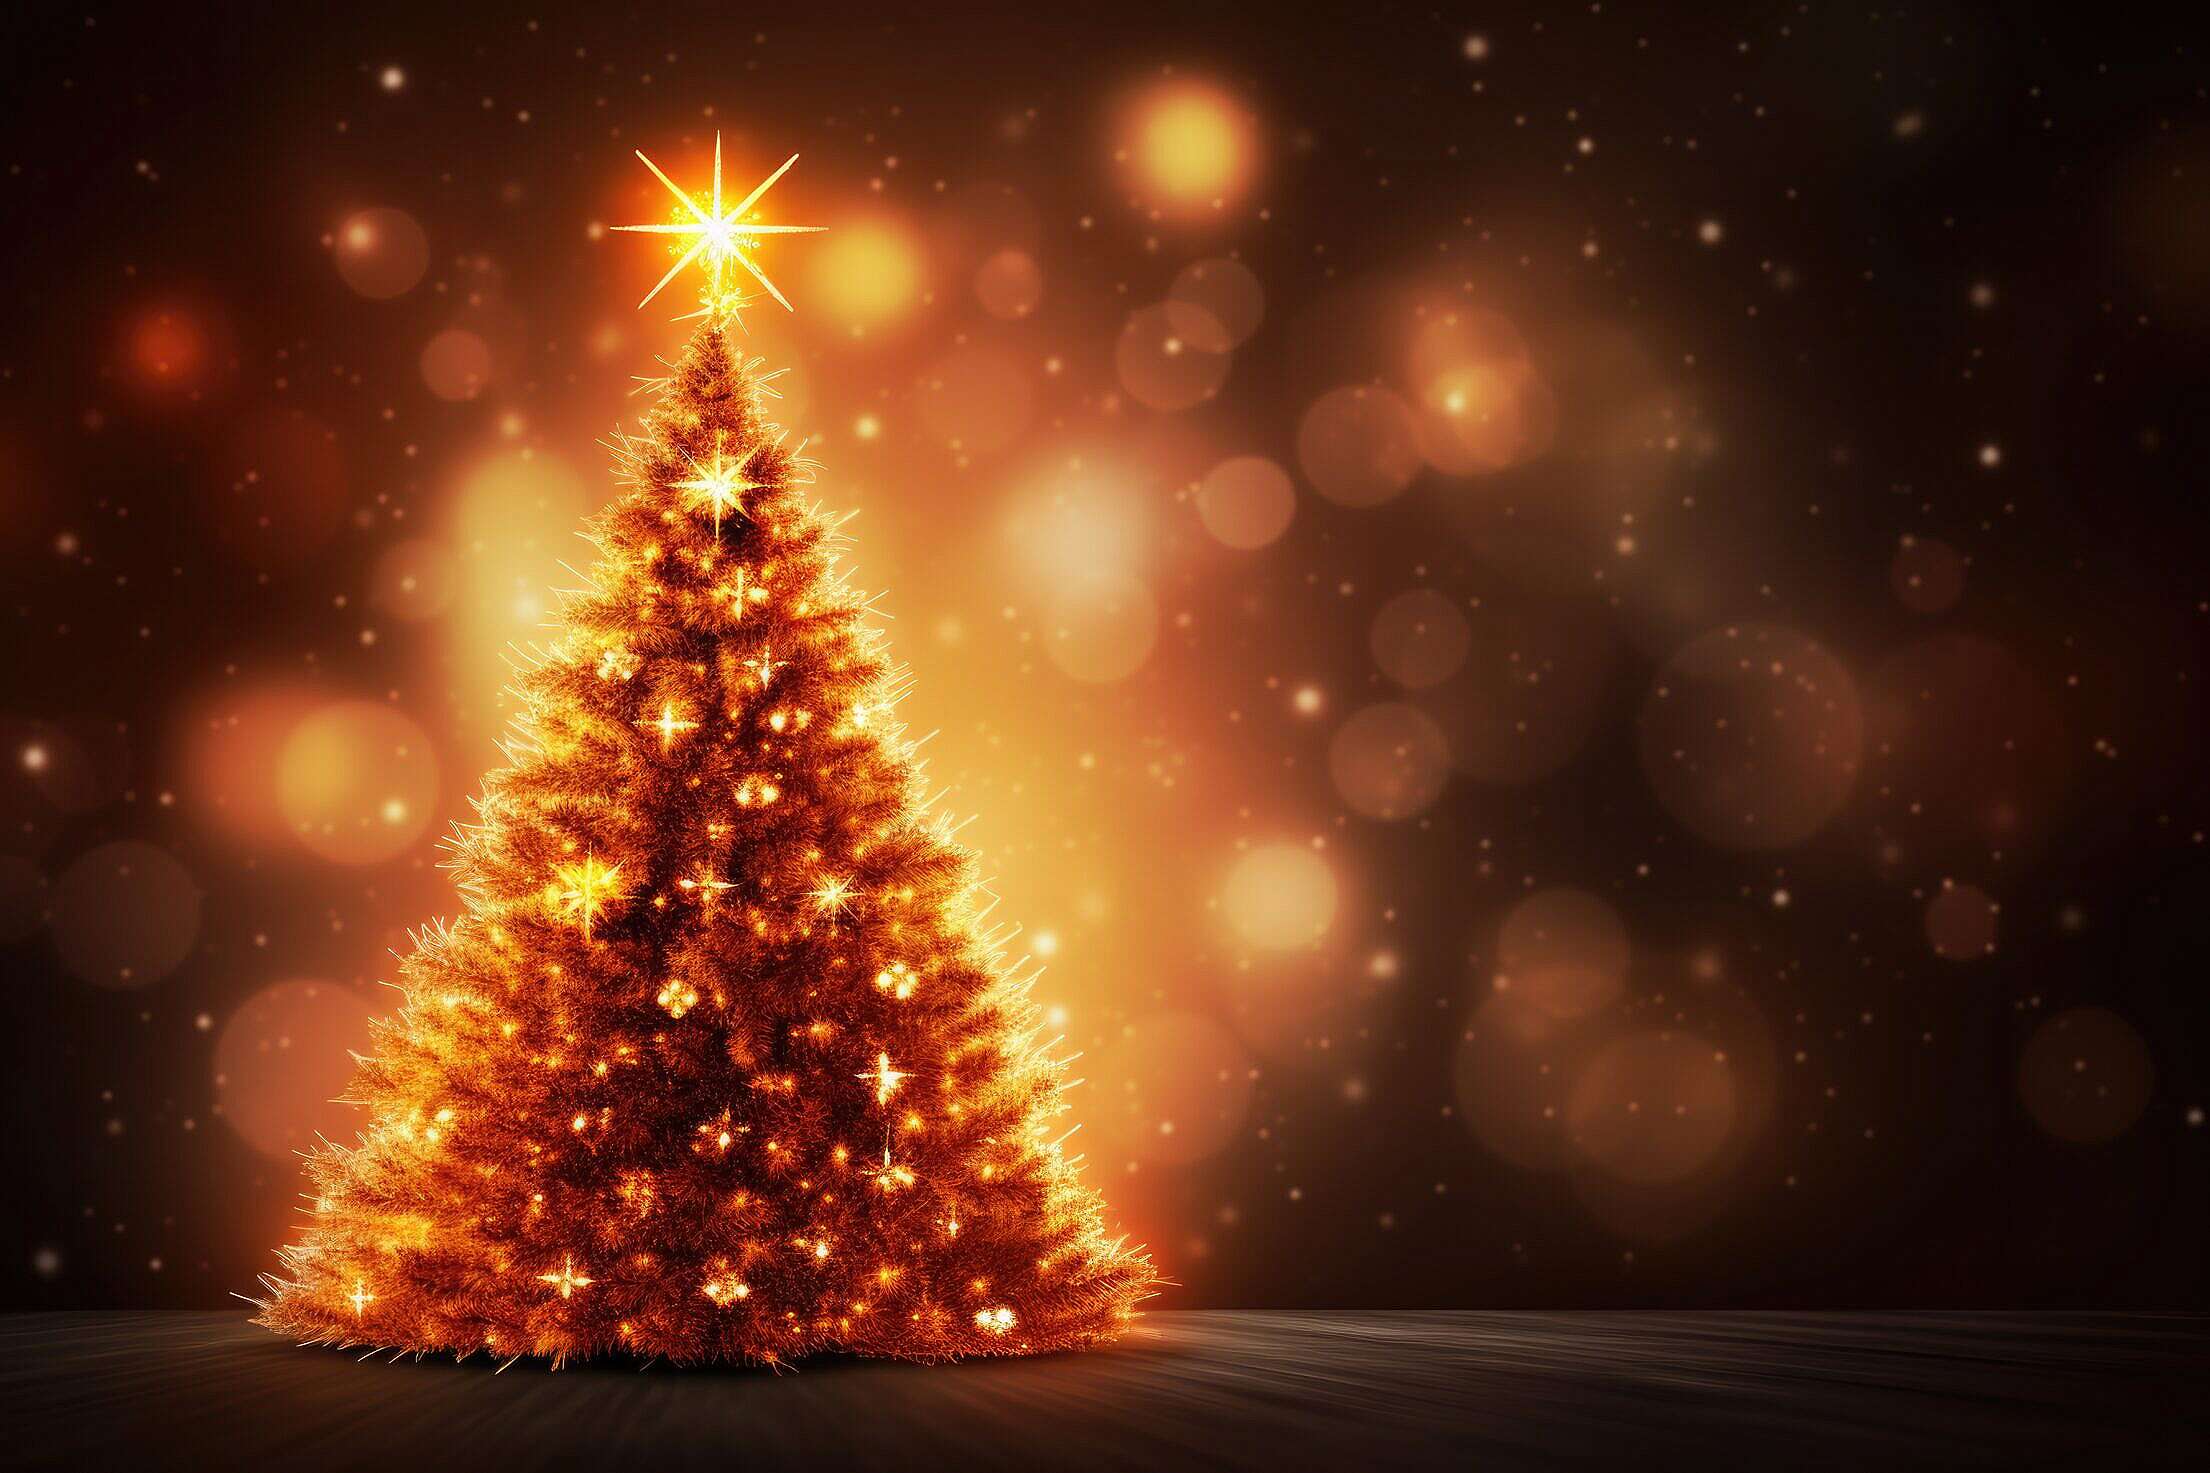 Glowing Golden Christmas Tree Free Stock Photo | picjumbo